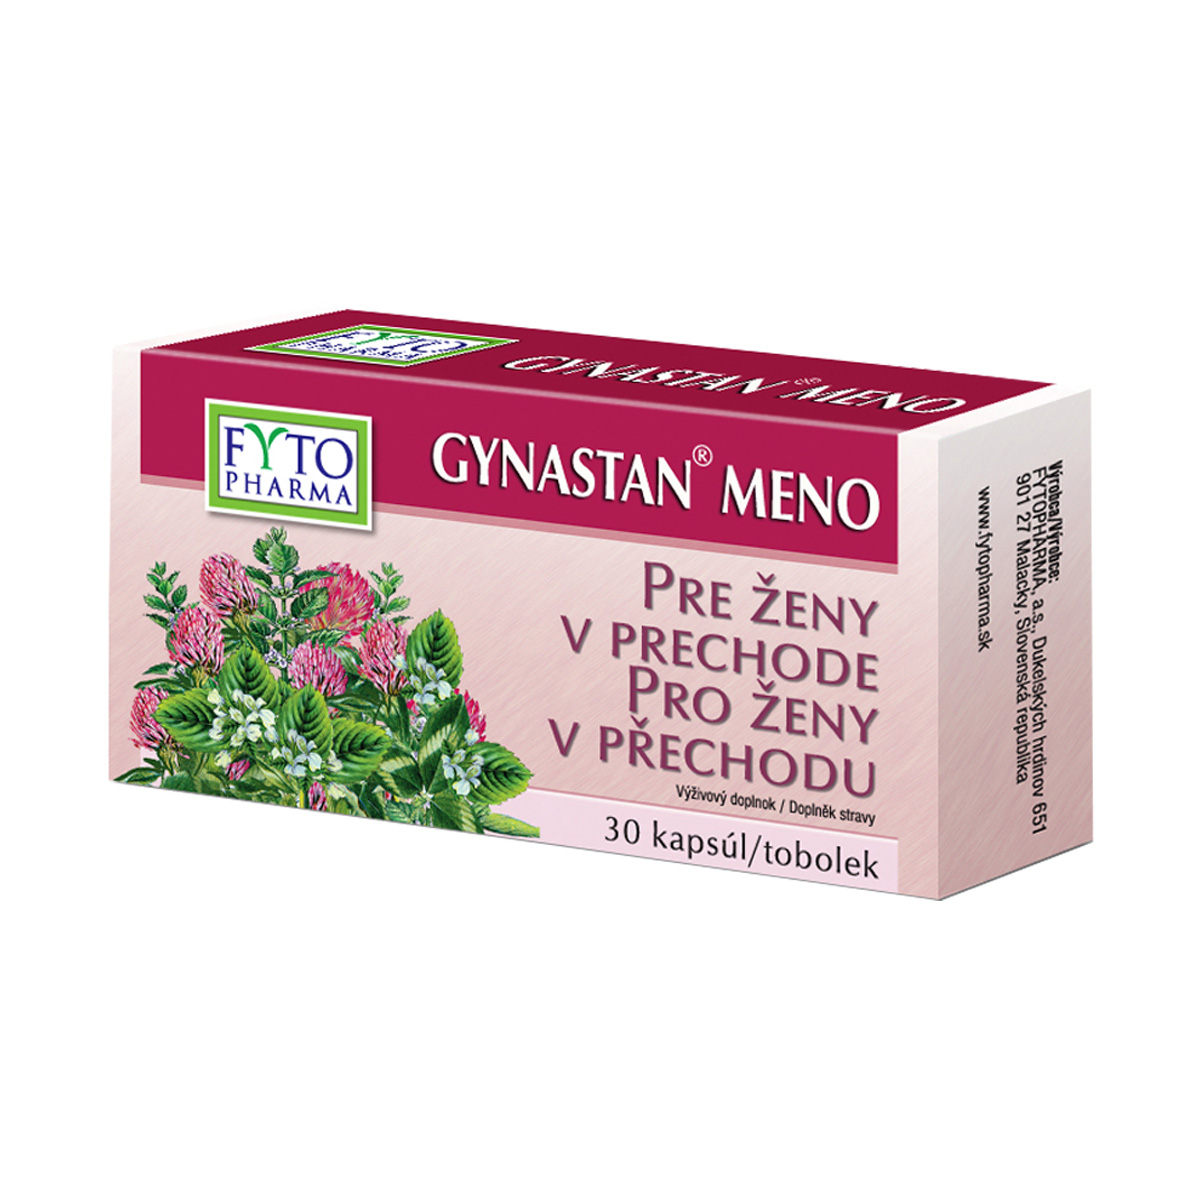 Fytopharma GYNASTAN® MENO tobolky při menopauze 30 cps